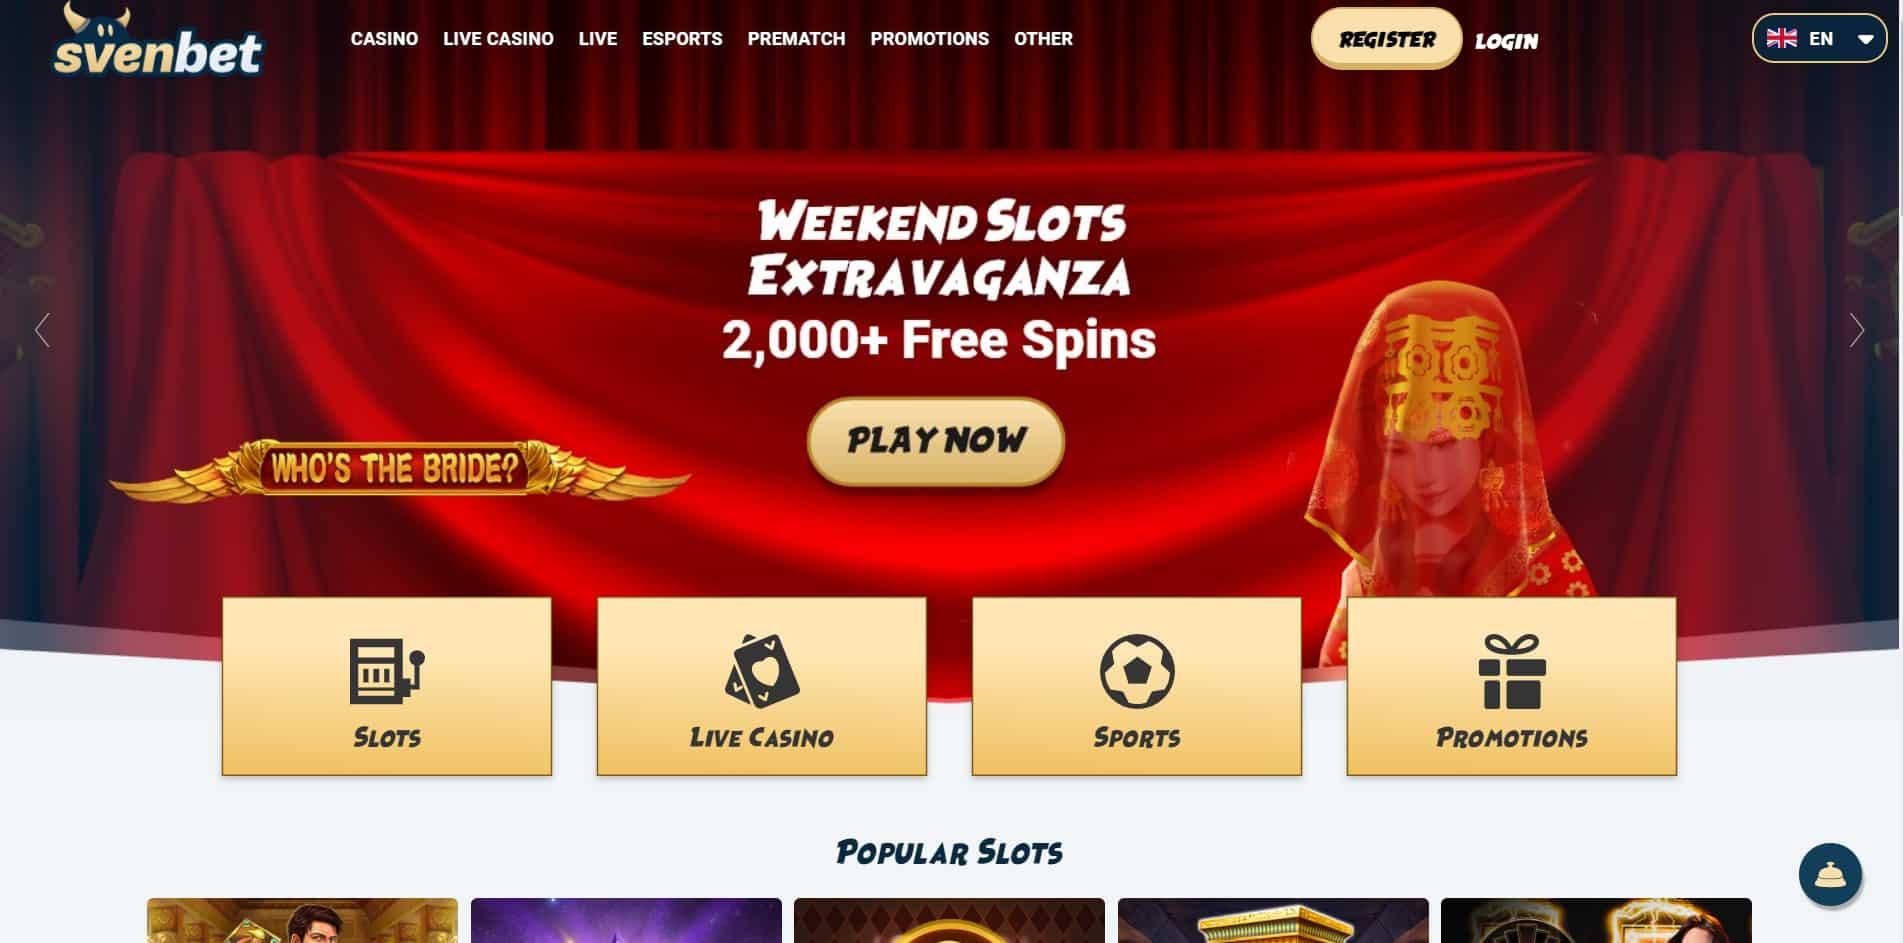 SvenBet casino homepage